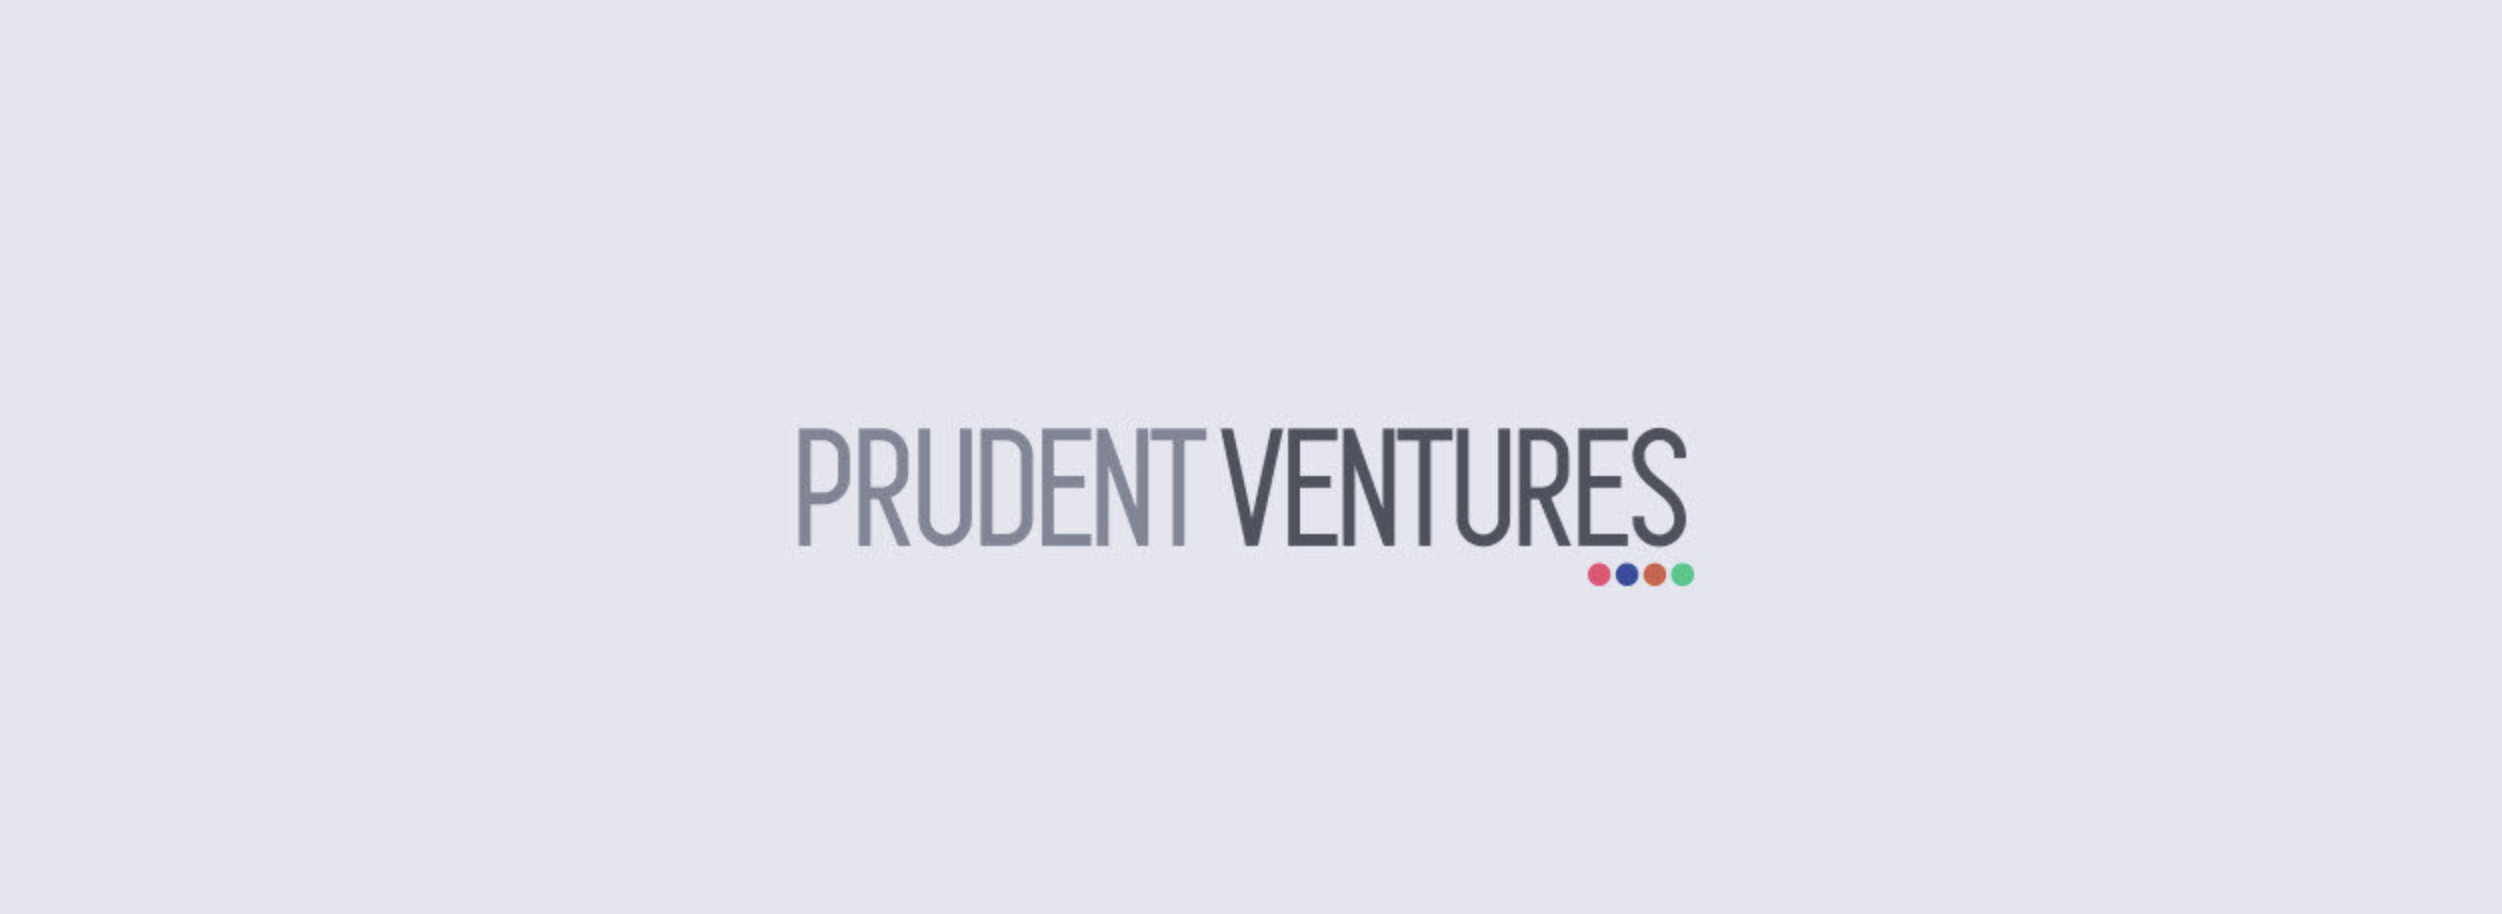 Prudent Ventures logo